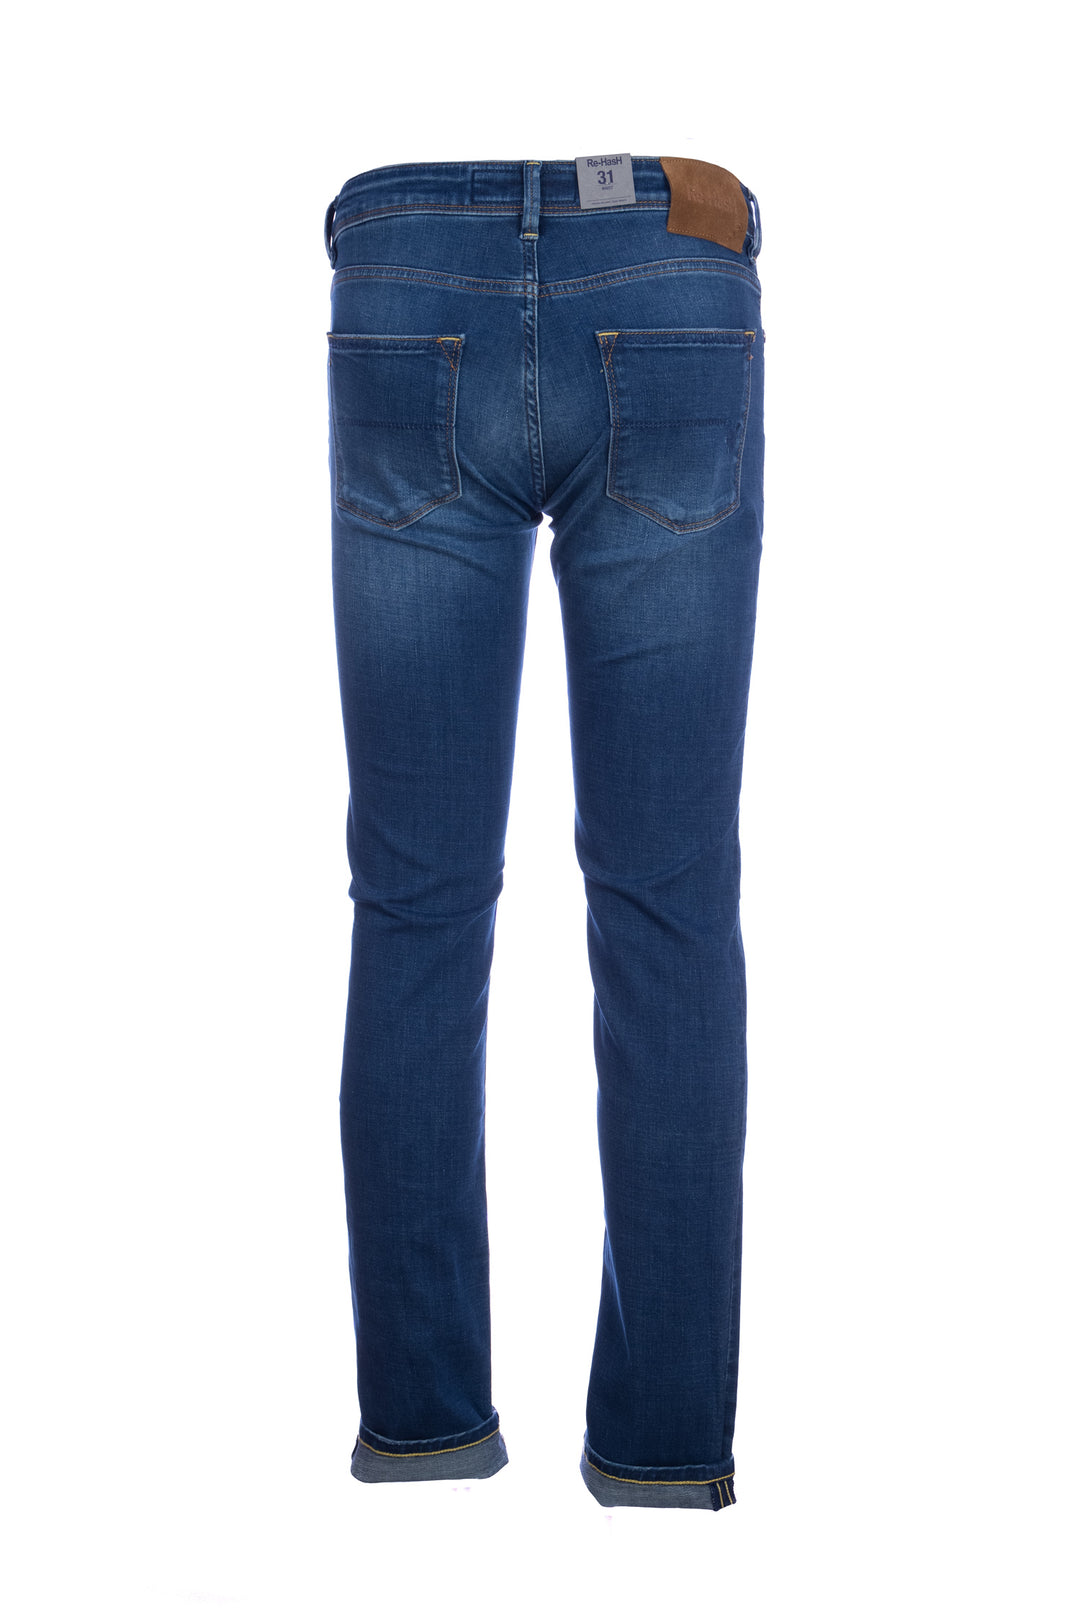 RE-HASH Jeans 5 tasche “RUBENS-Z” in denim stretch lavaggio medio 9oz - Mancinelli 1954